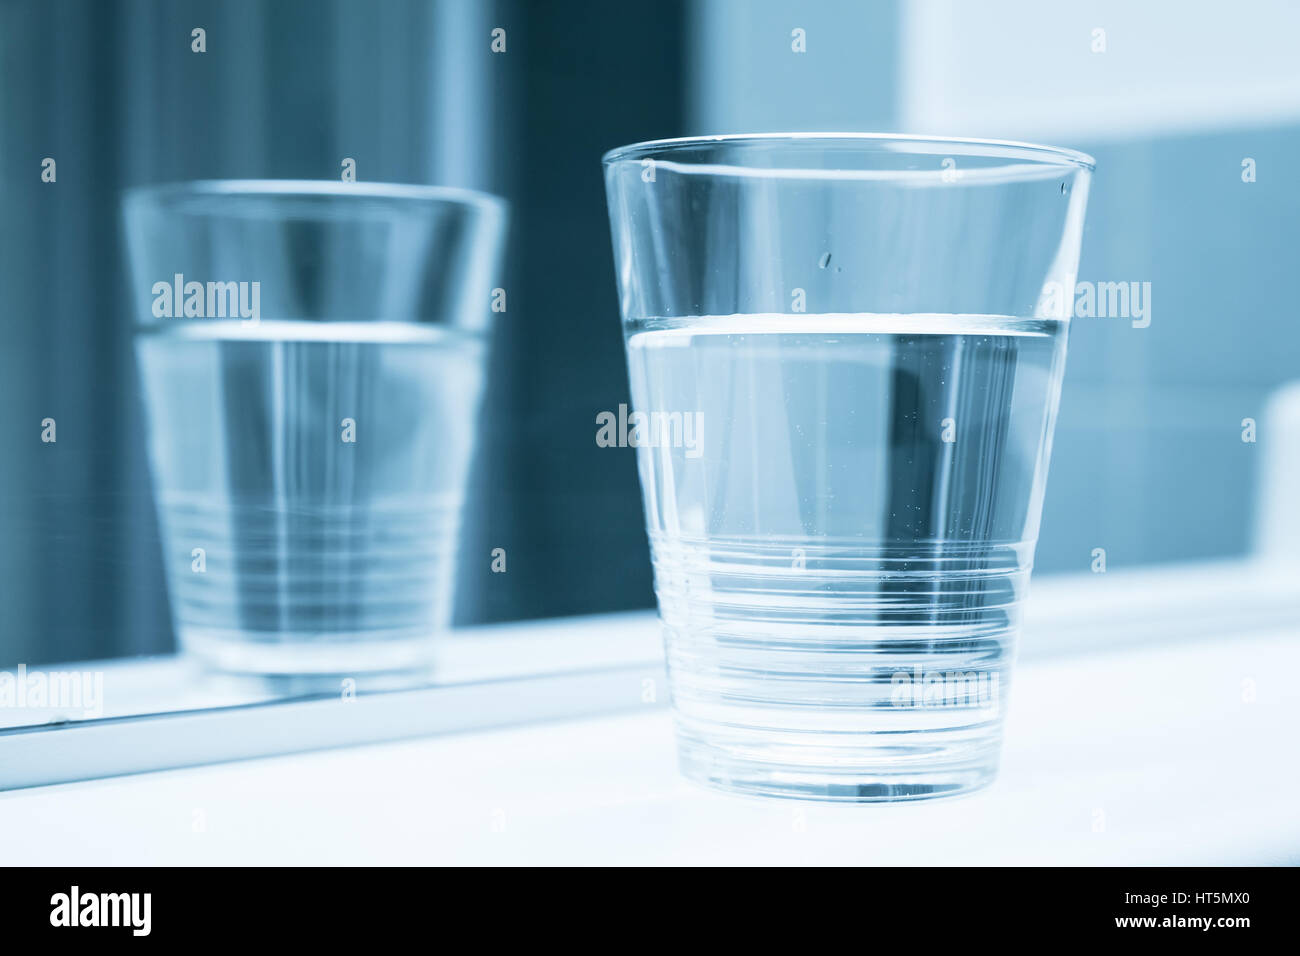 Glass of water stand on shelf near mirror, blue toned closeup photo Stock Photo